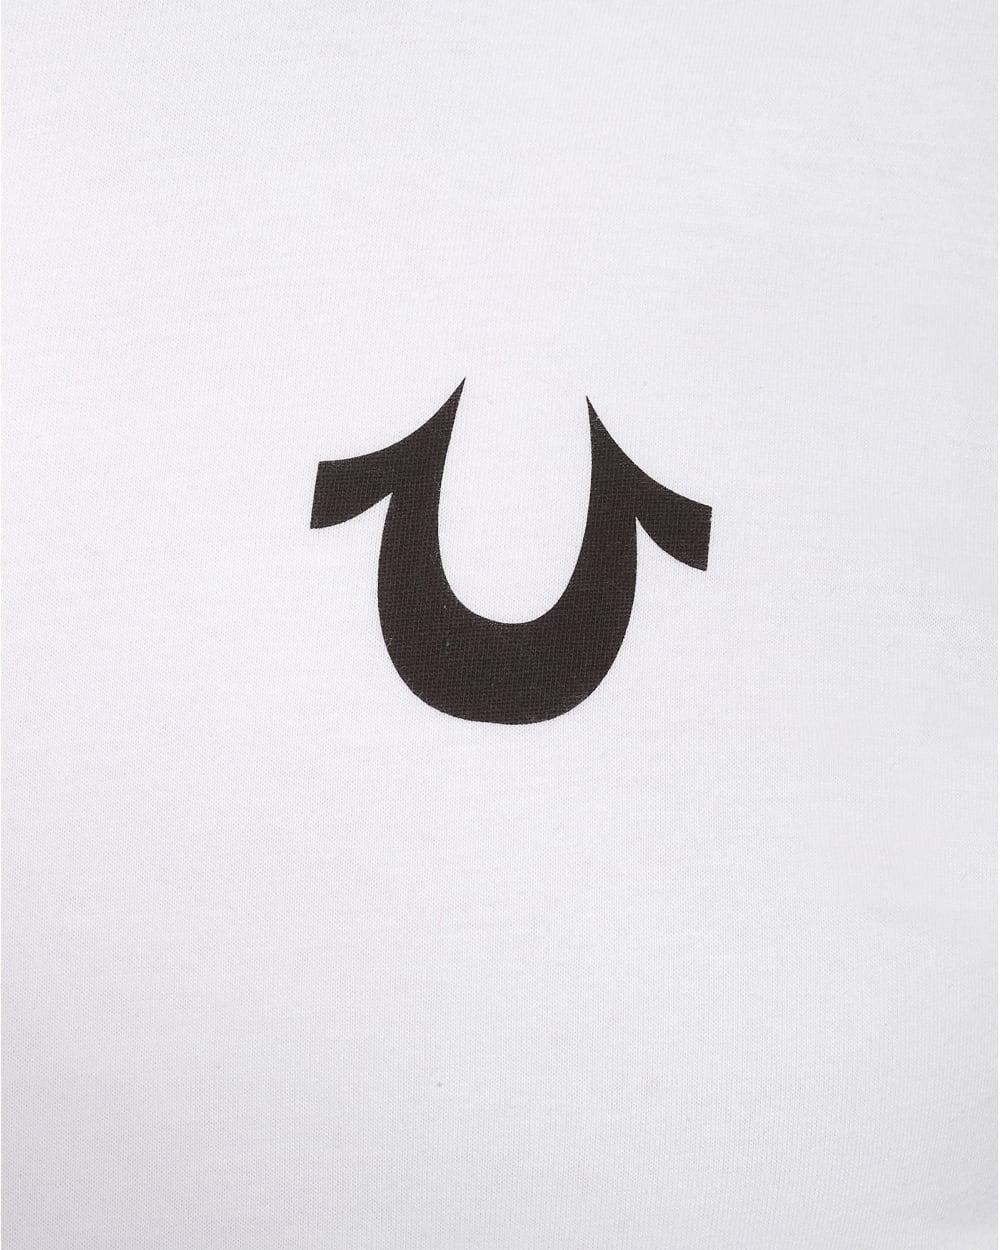 True Religion Logo - True Religion Jeans Mens Traditional Logo T-Shirt, Plain White Tee